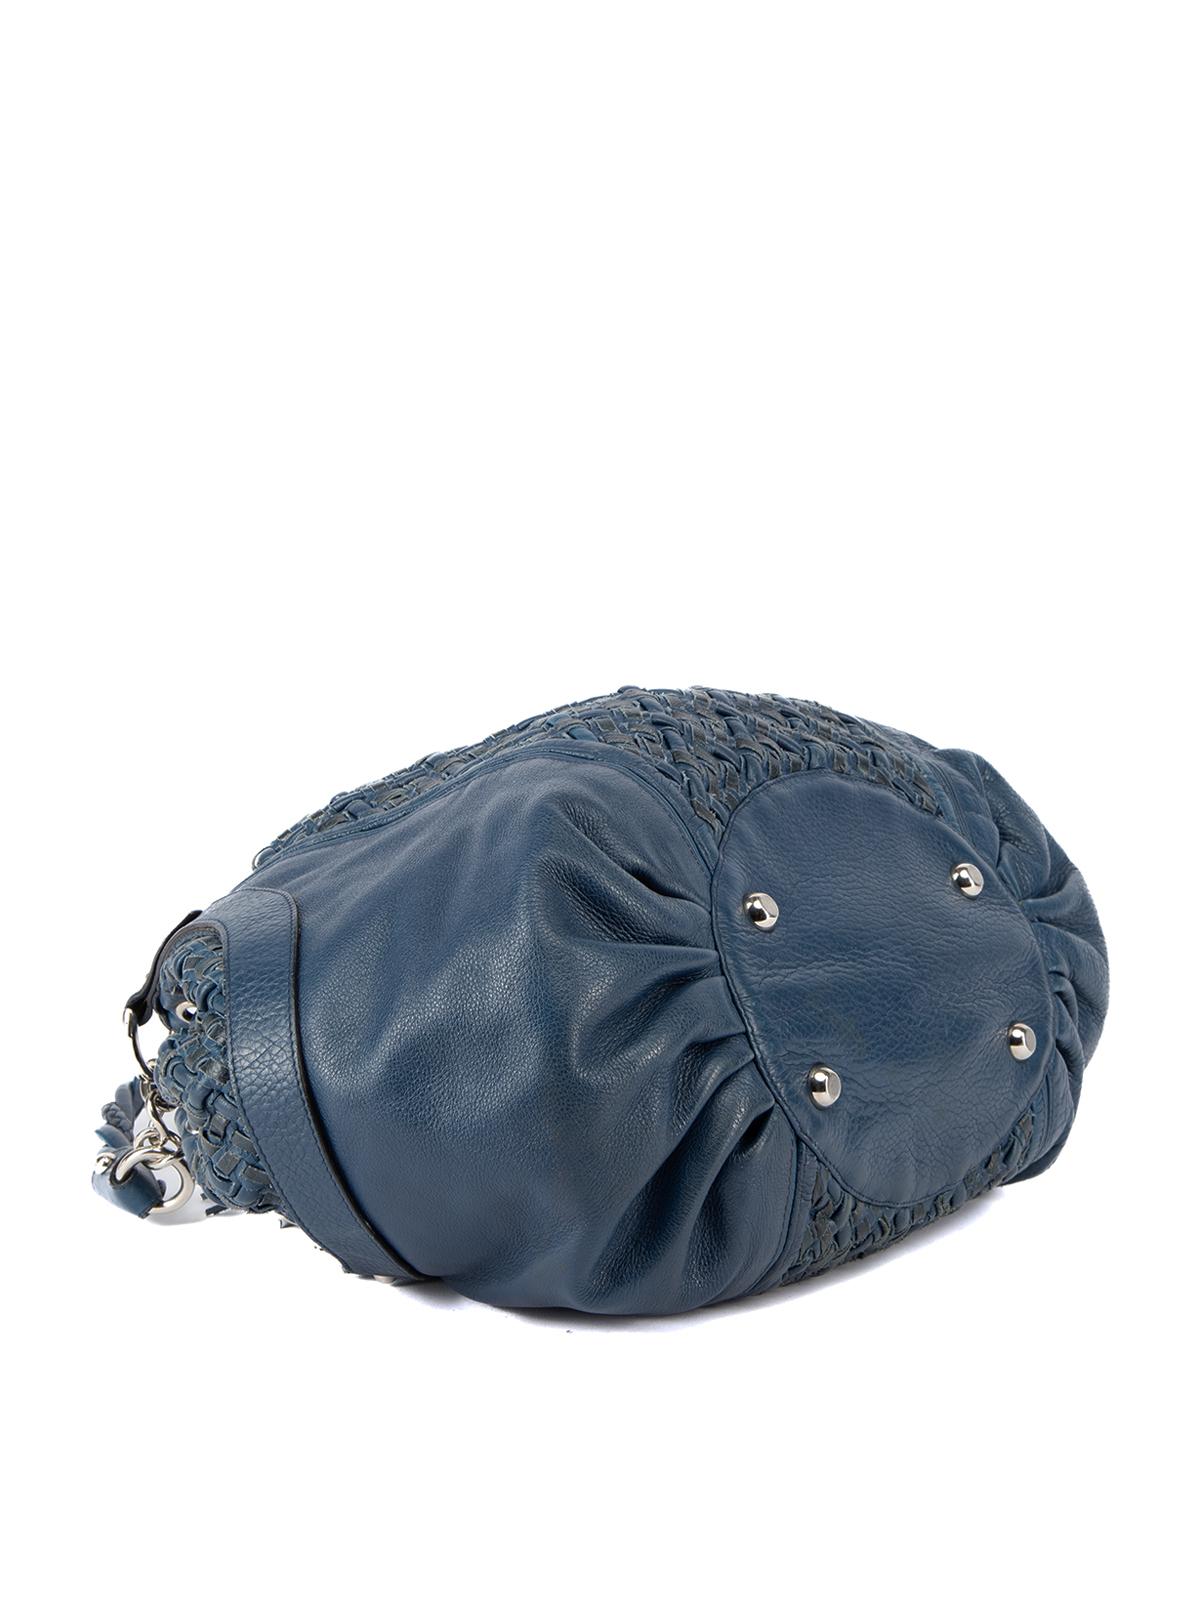 Pre-Loved Zac Posen Women's Blue Leather Woven Shoulder Bag 2